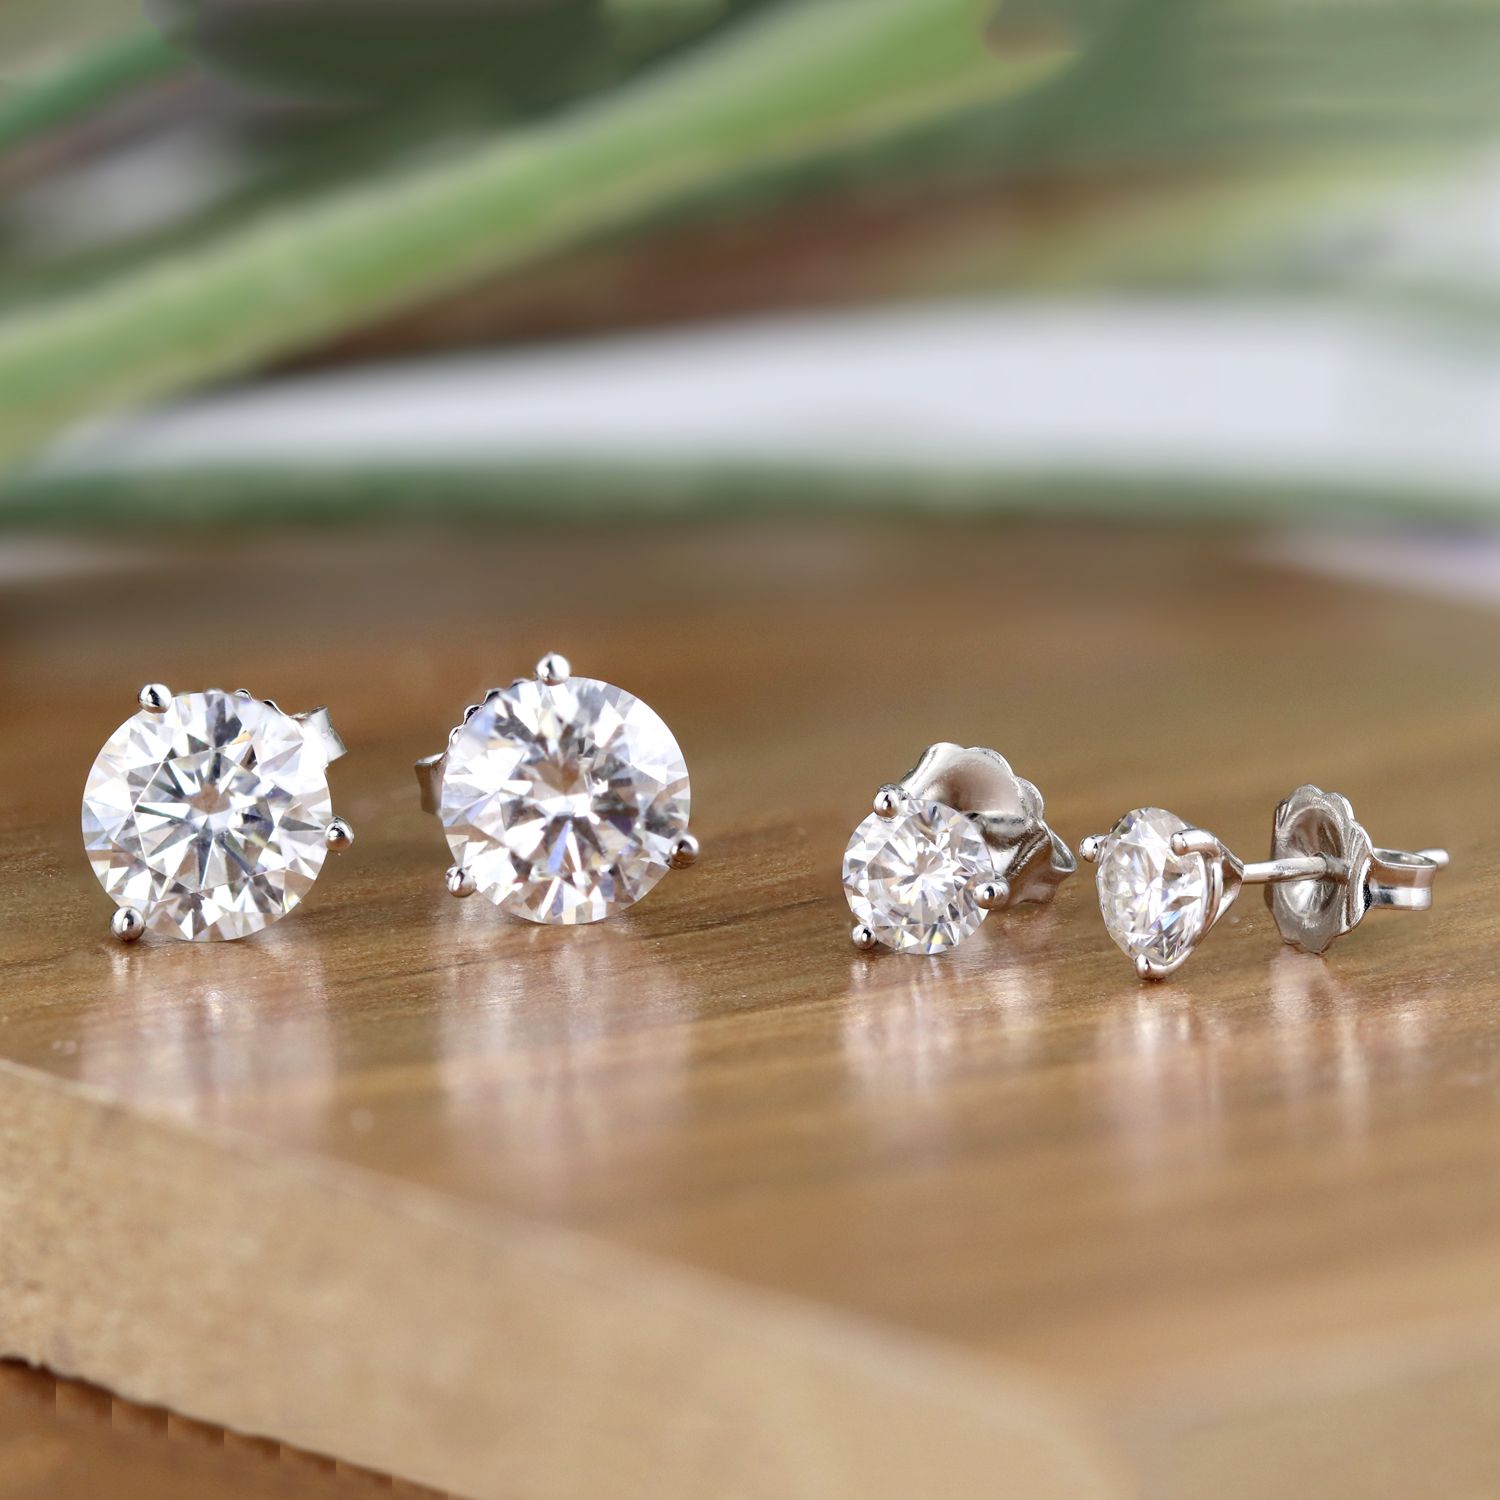 Stunning 14k Gold Diamond Stud Earrings Guide - Everything-Diamond